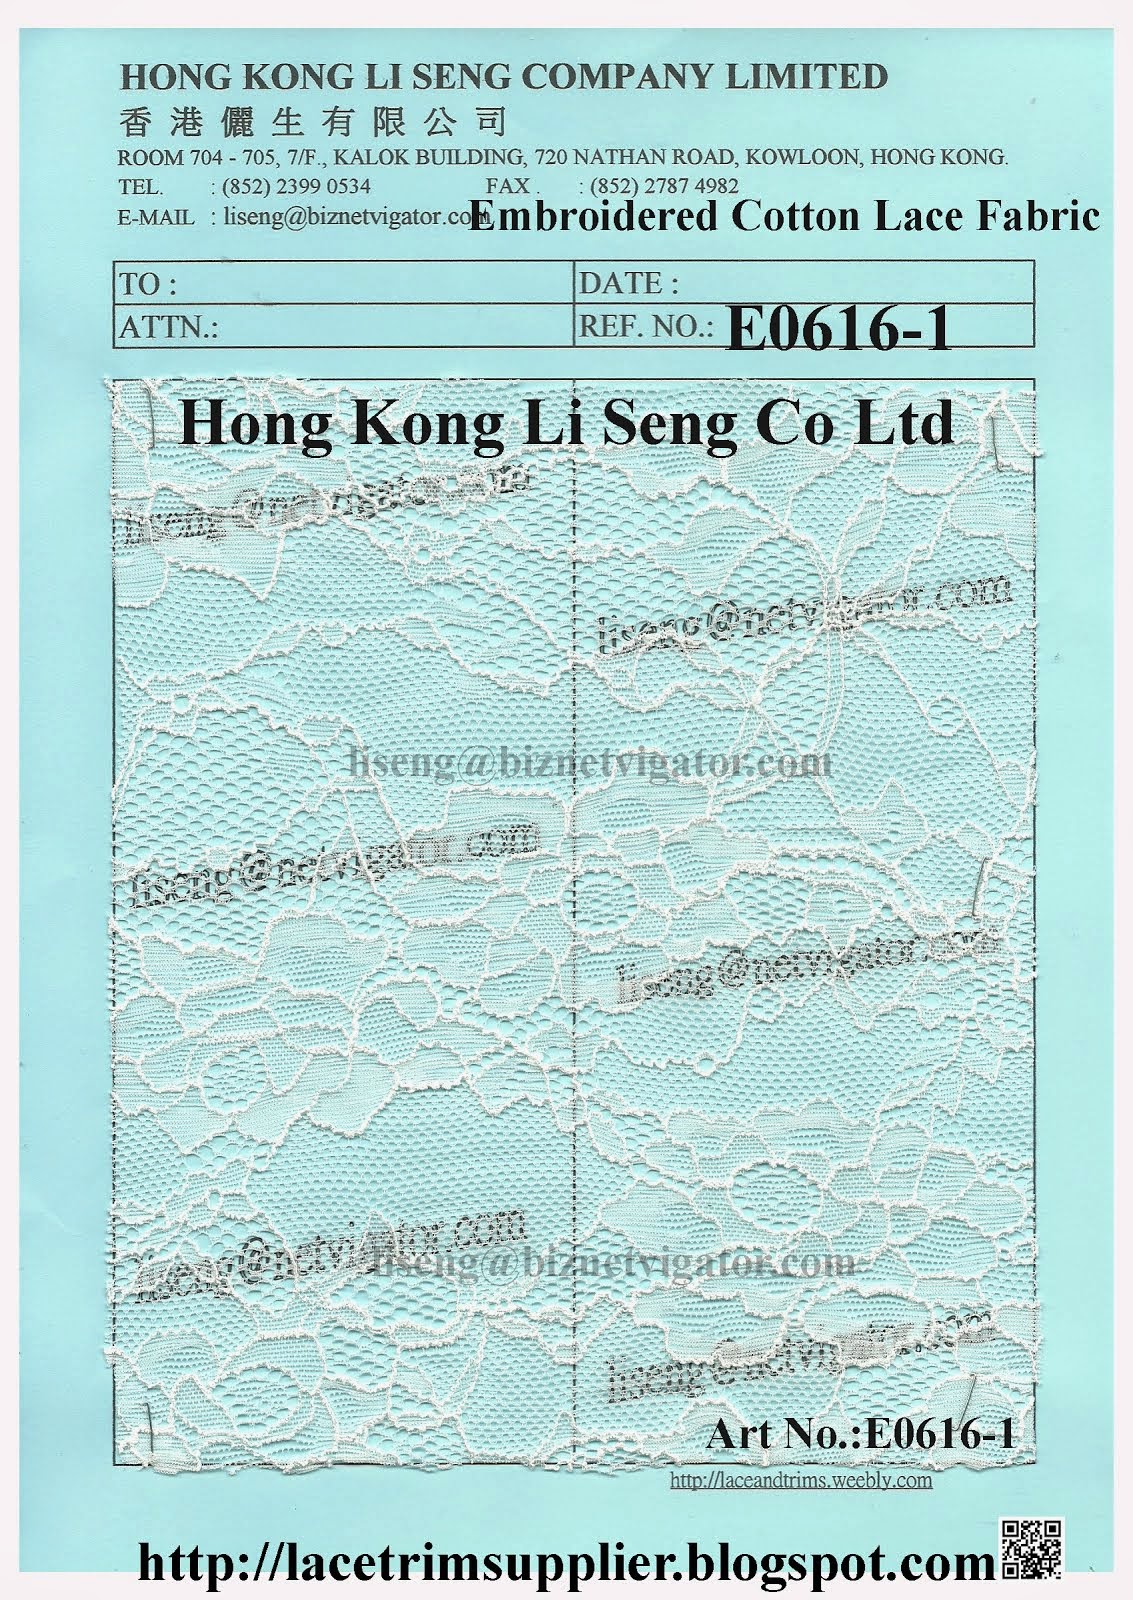 Mesh Lace Fabric Factory Wholesaler and Supplier - Hong Kong Li Seng Co Ltd